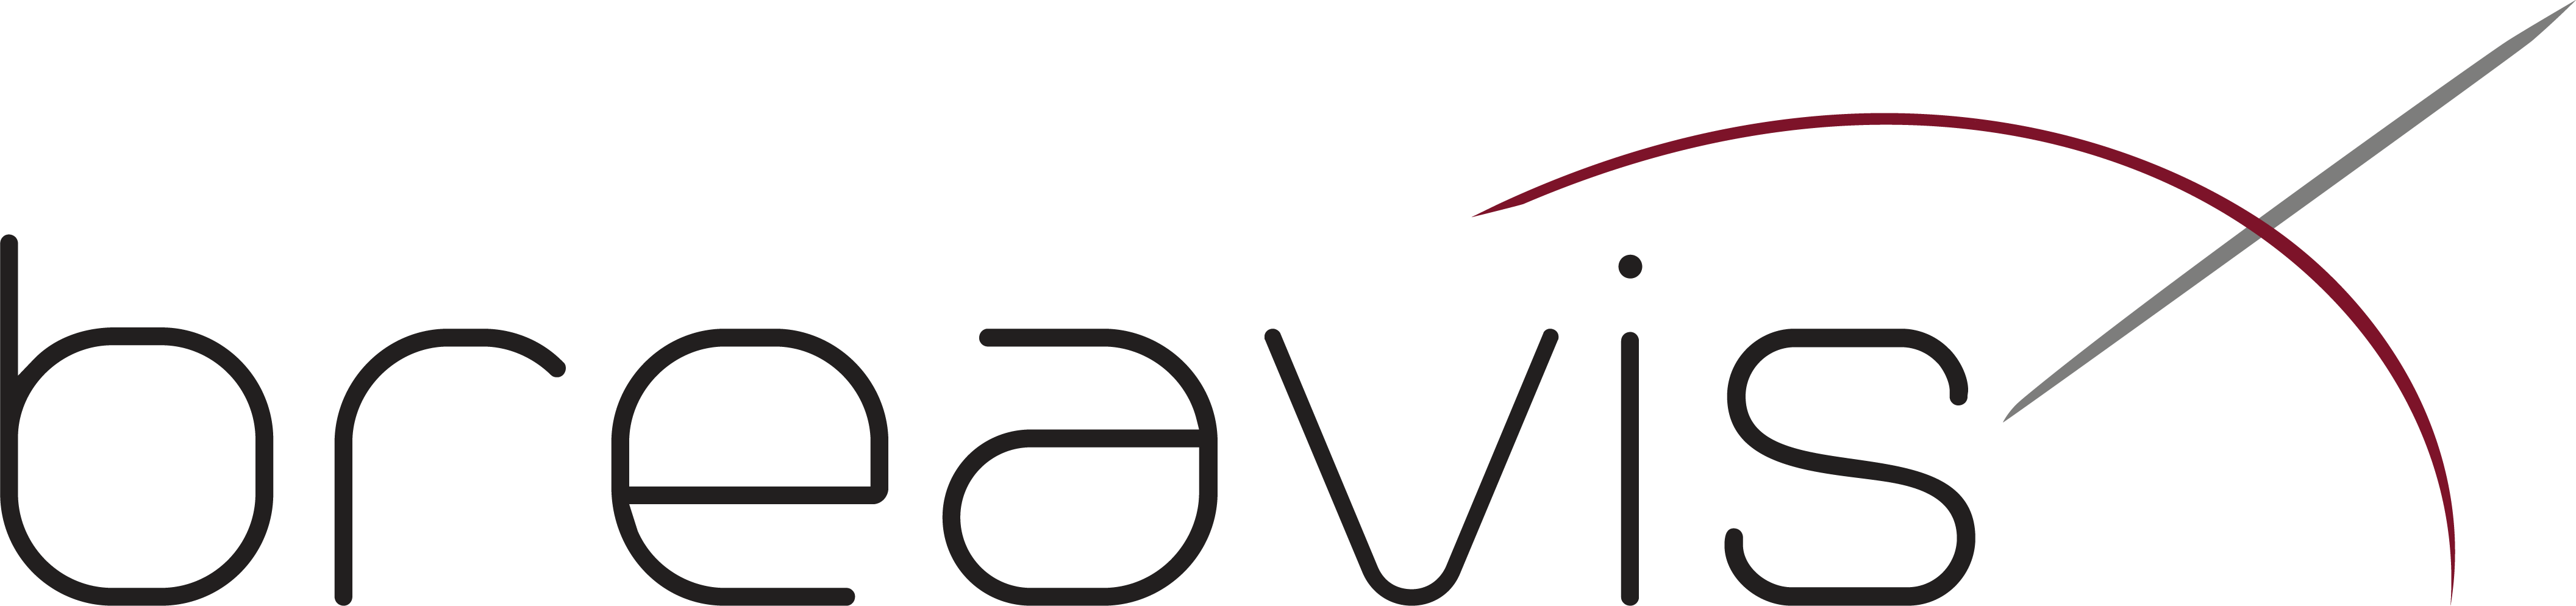 Breavis_Logo